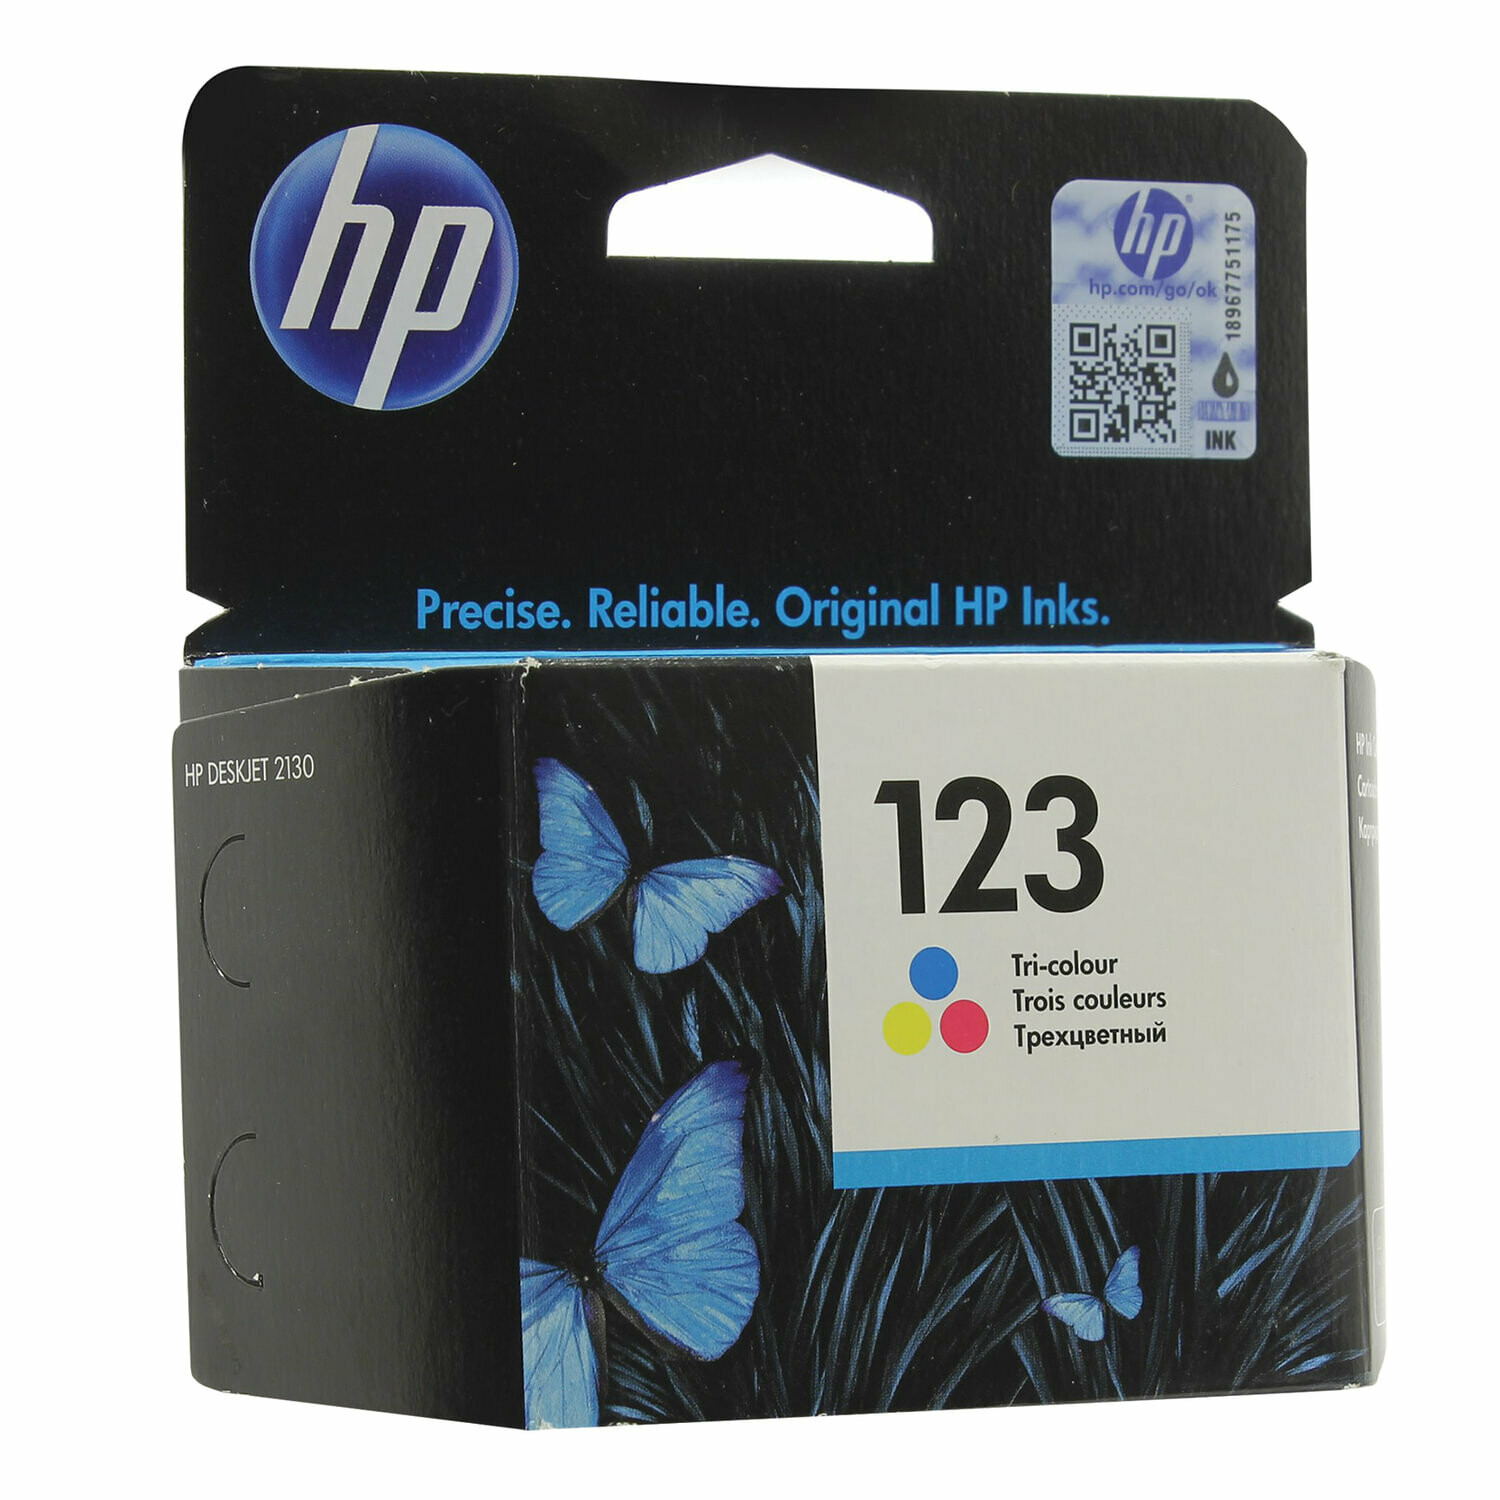 HP 123 Tri-Color Ink Cartridge